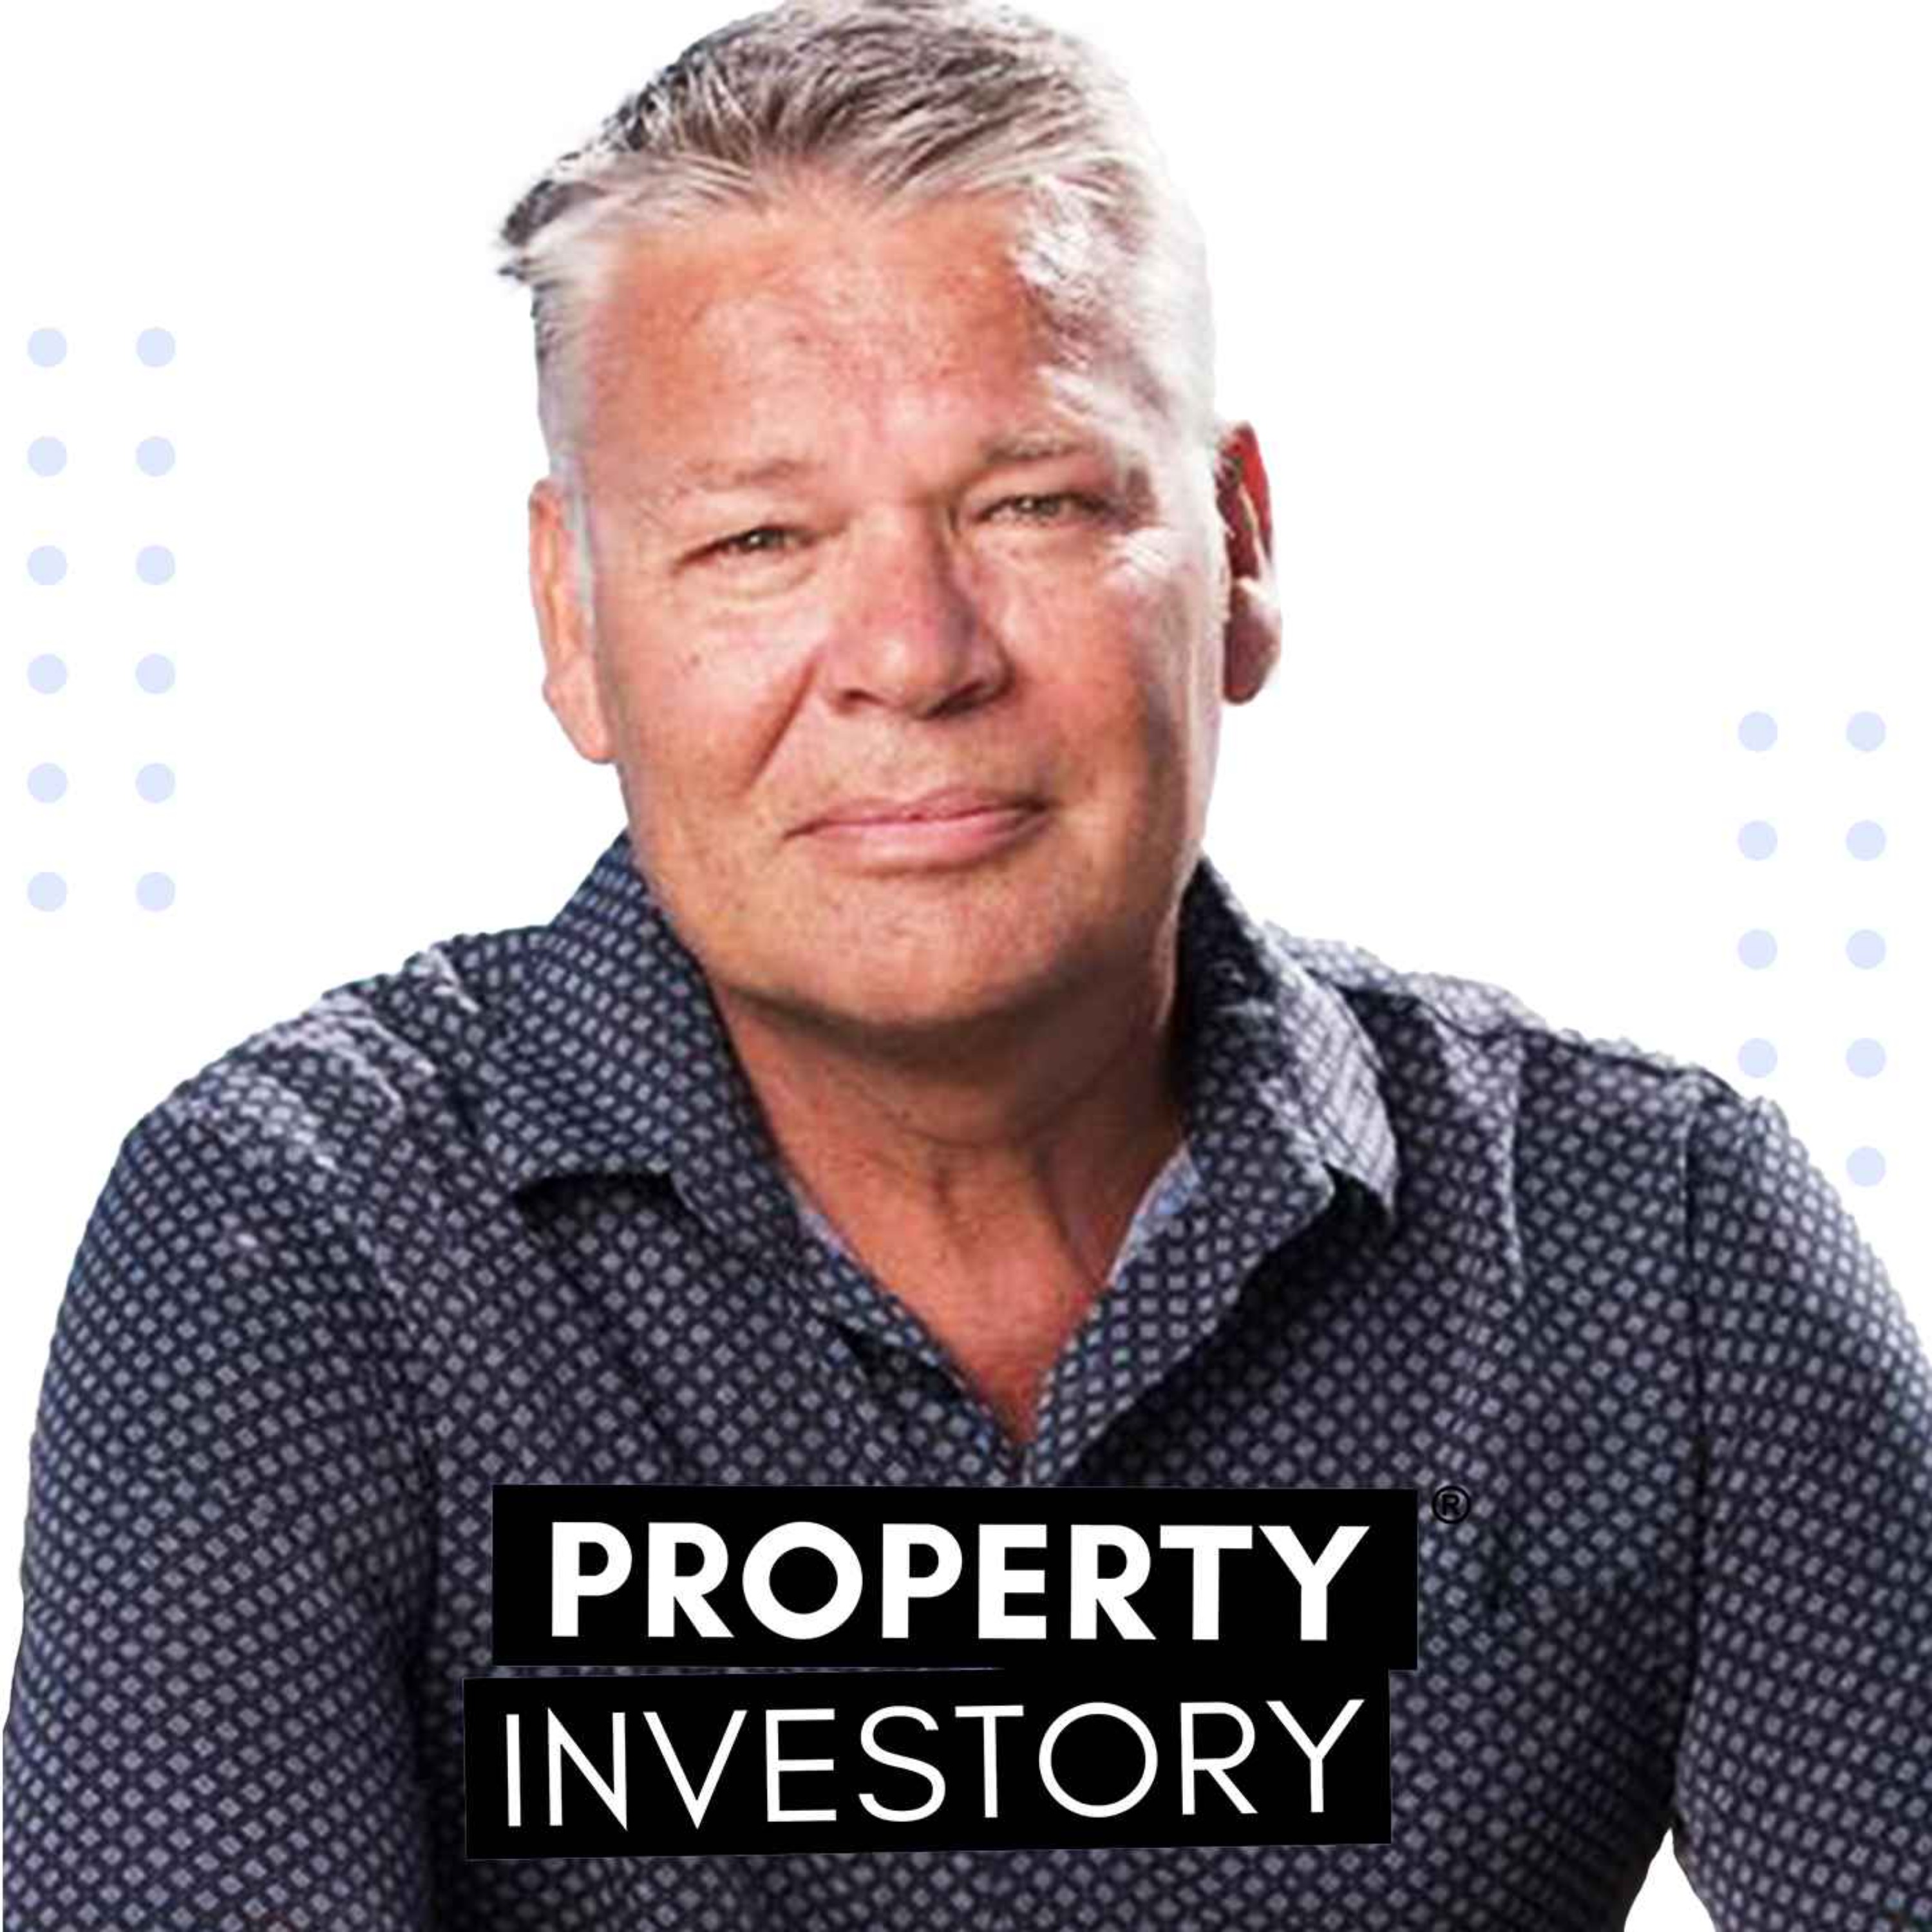 Phil Verdouw: Venturing into His passion for Property